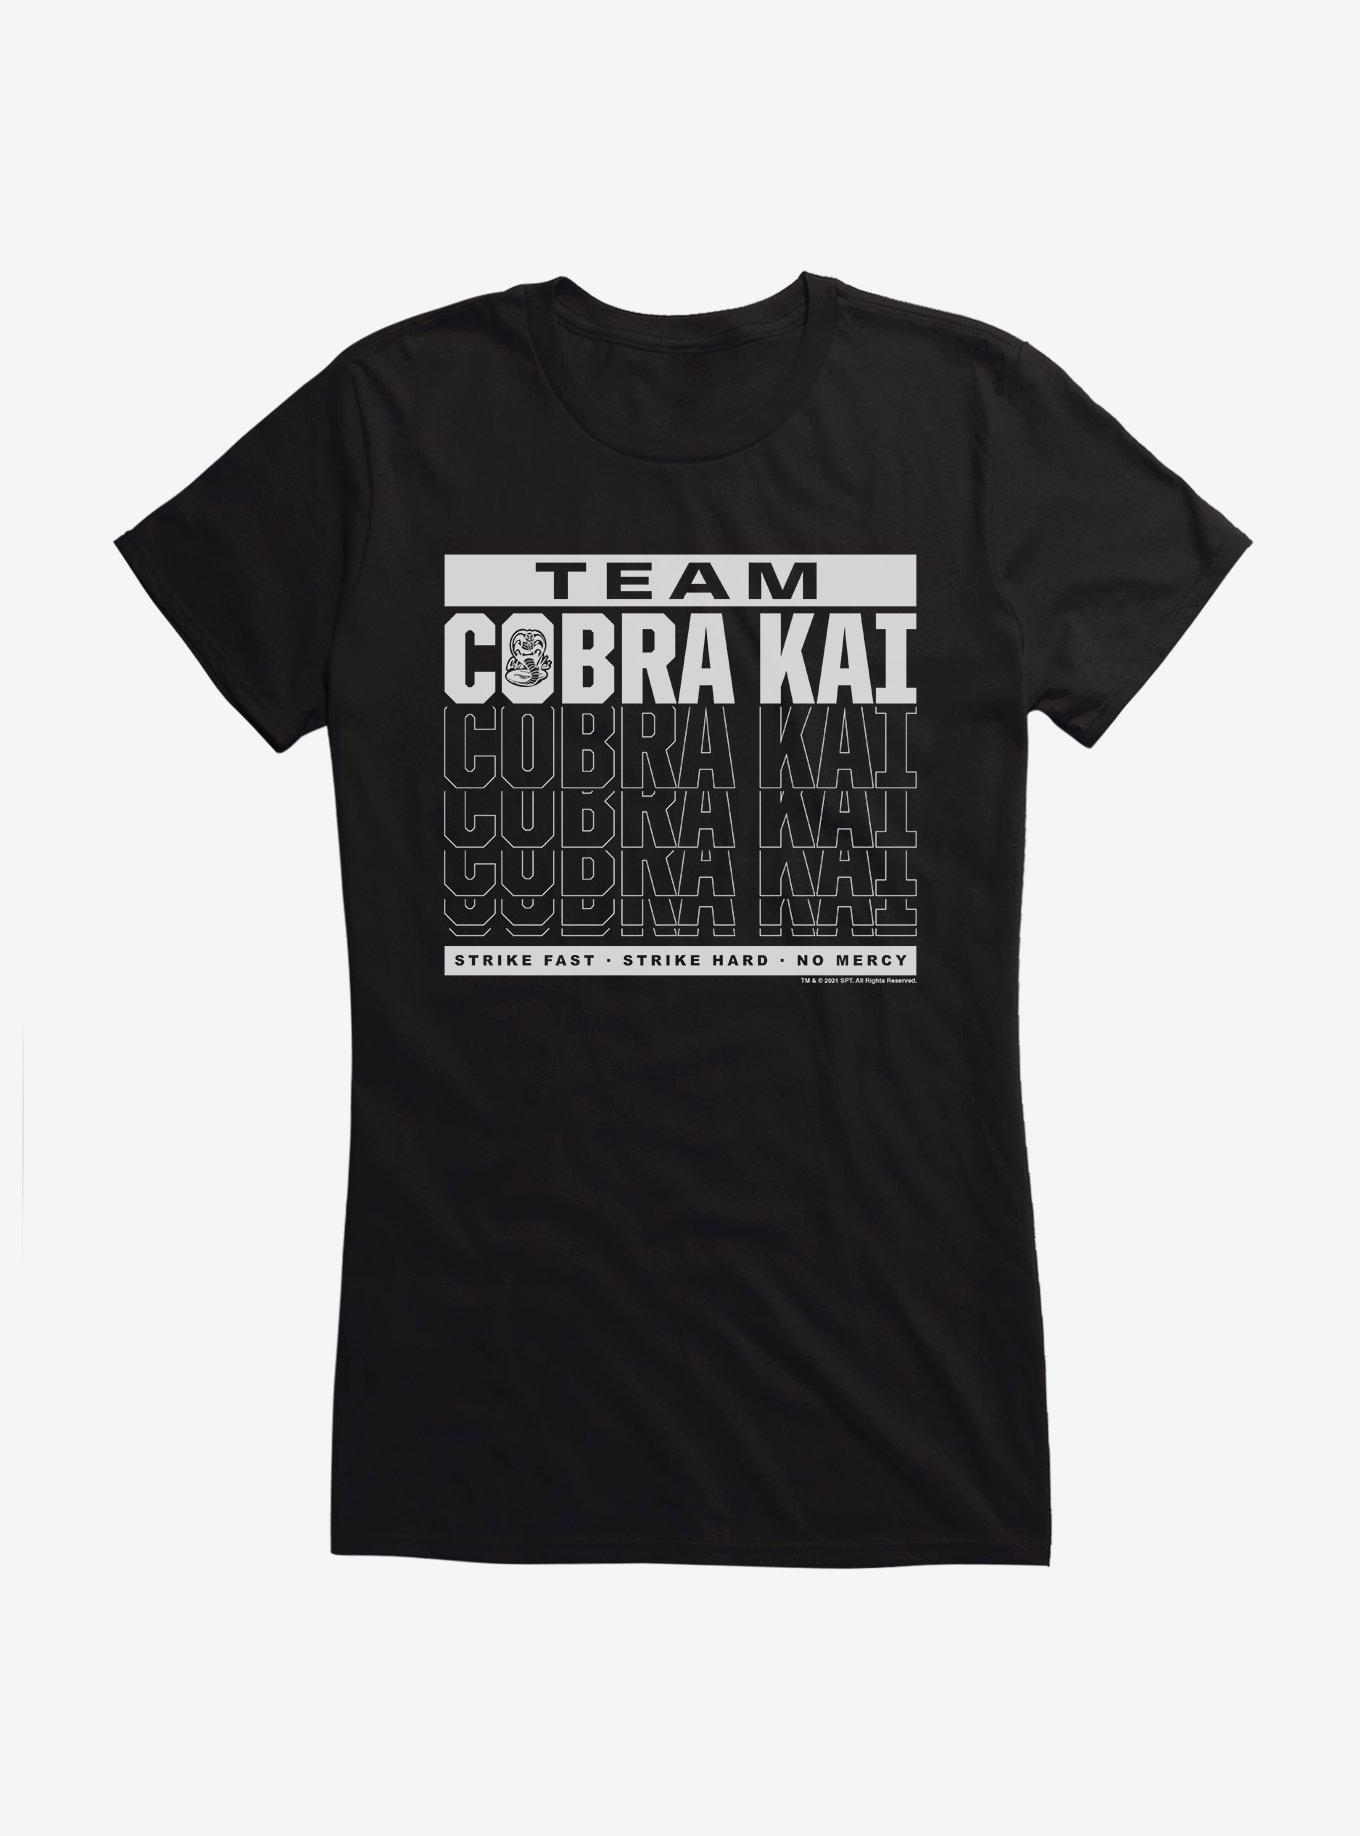 Cobra Kai S4 Team Motto Girls T-Shirt